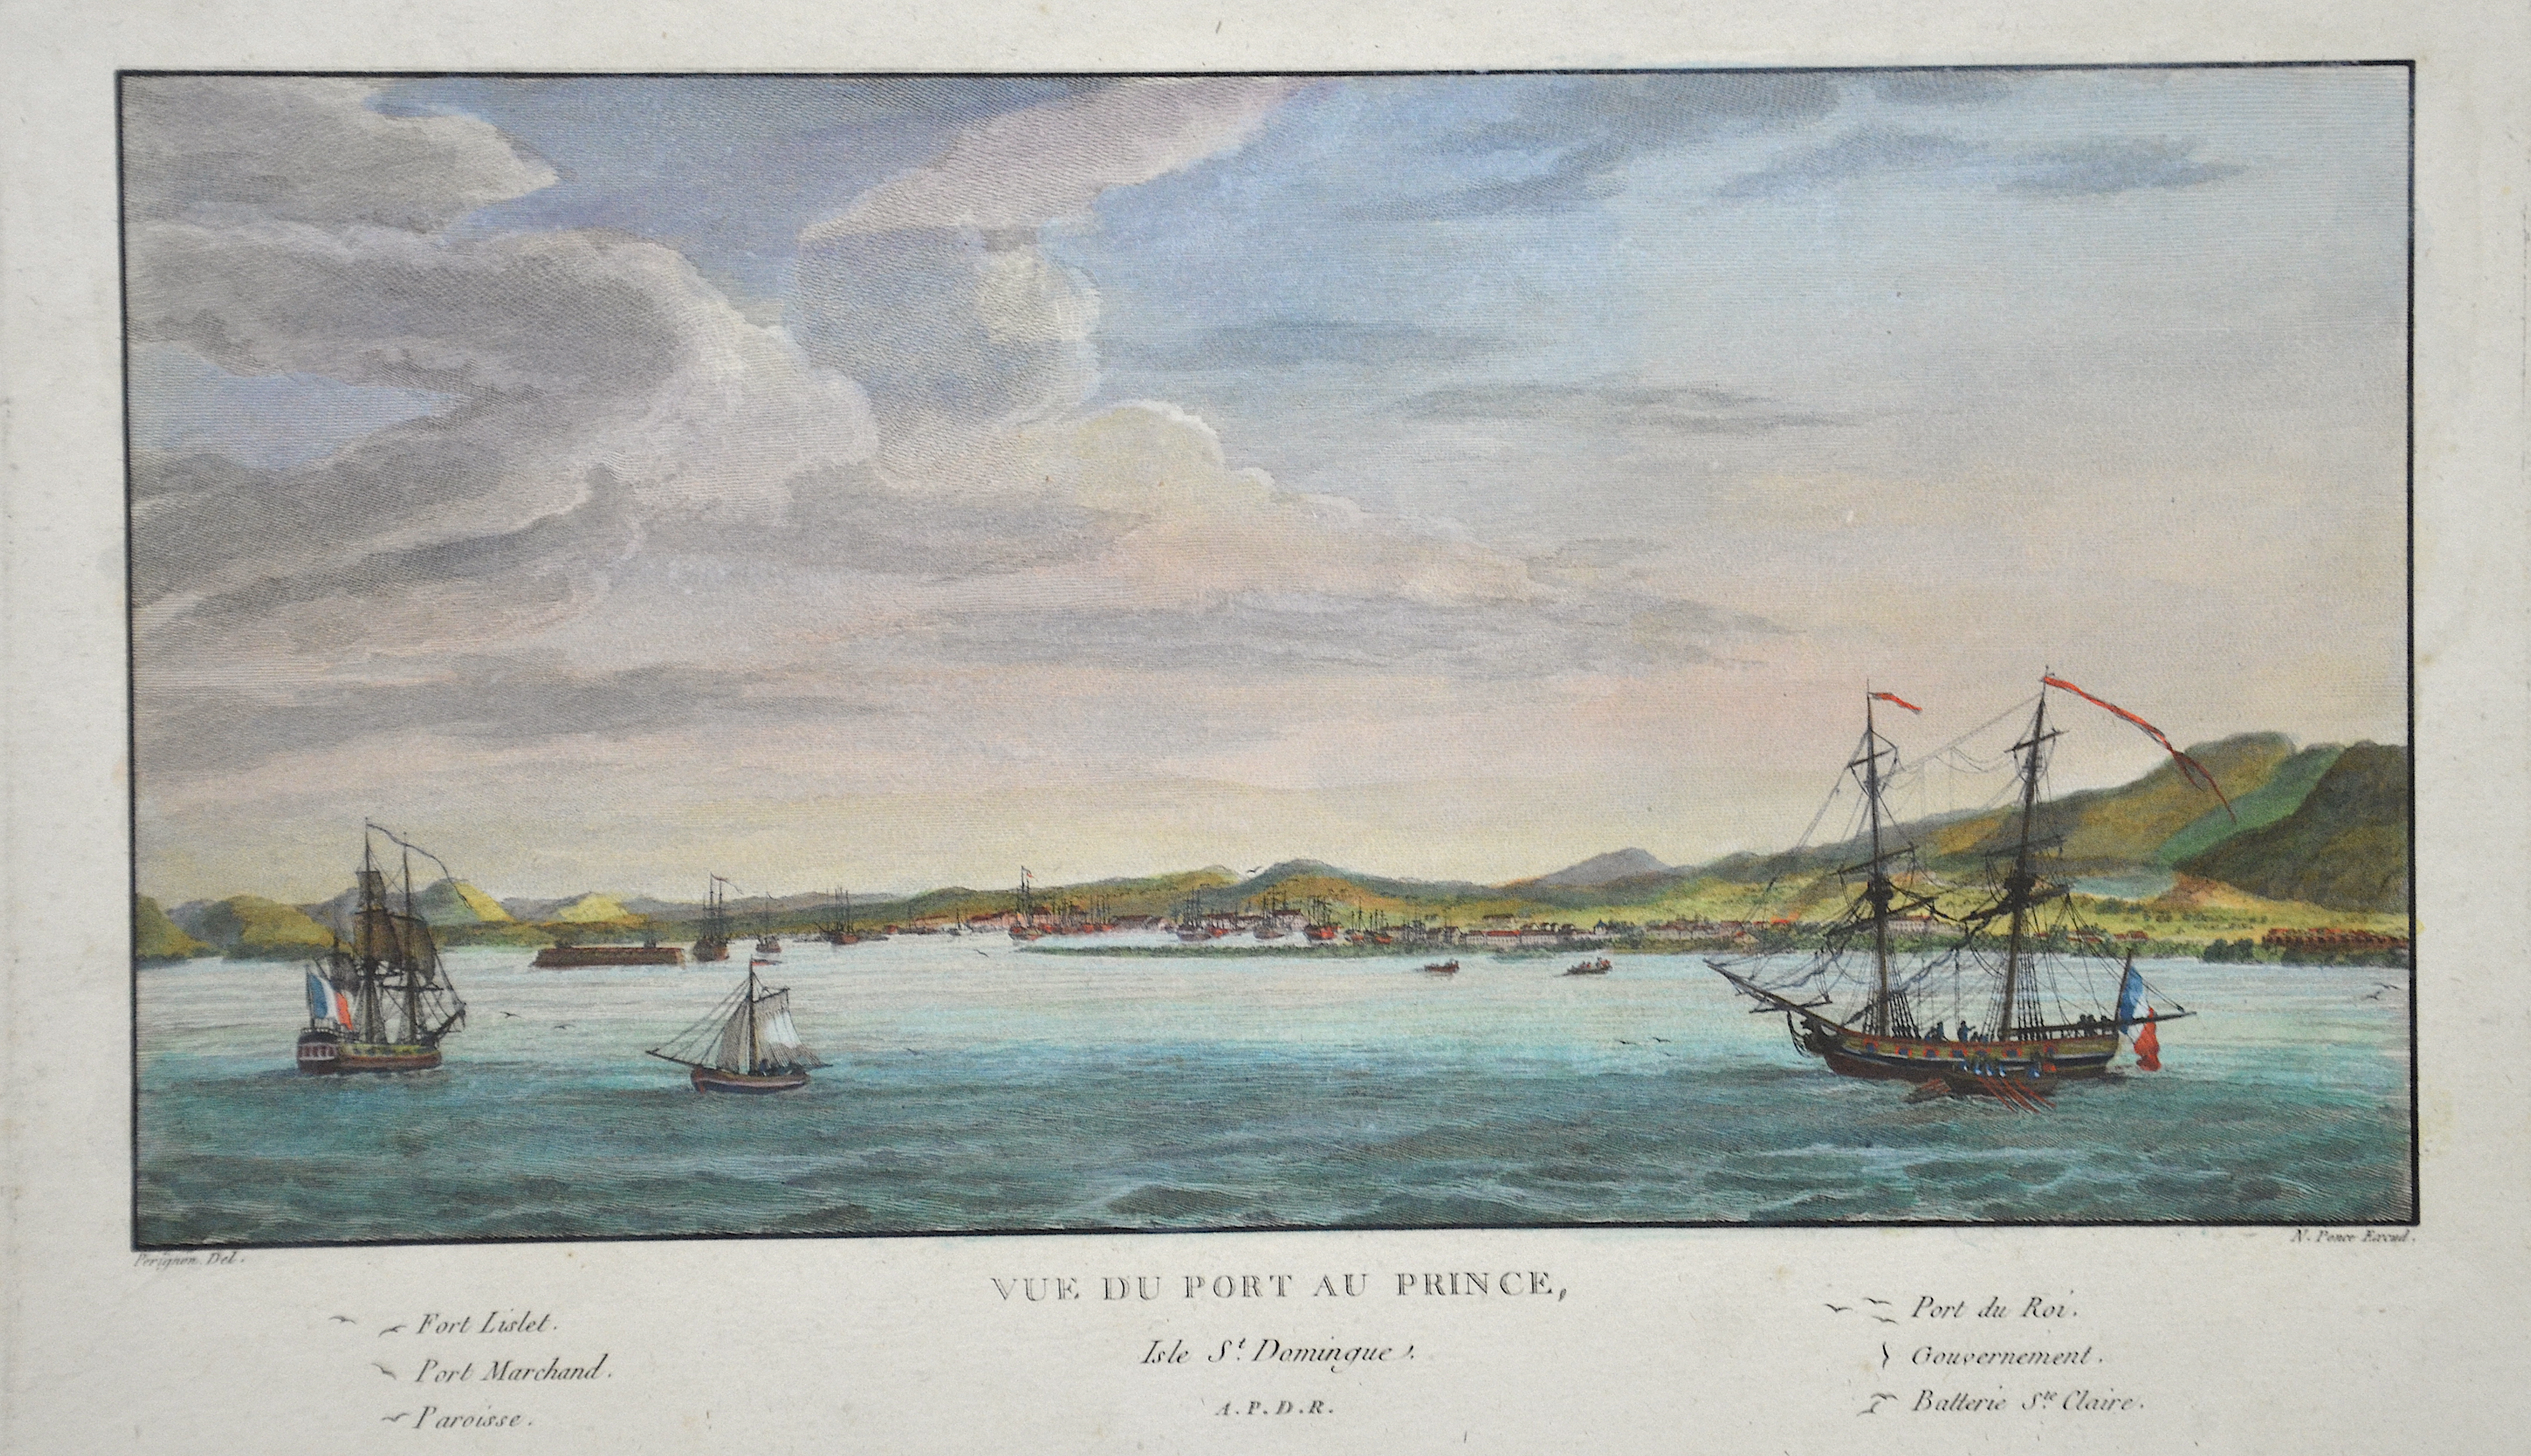 Ponce N. Vue du porte au Prince, Isle St. Domingue